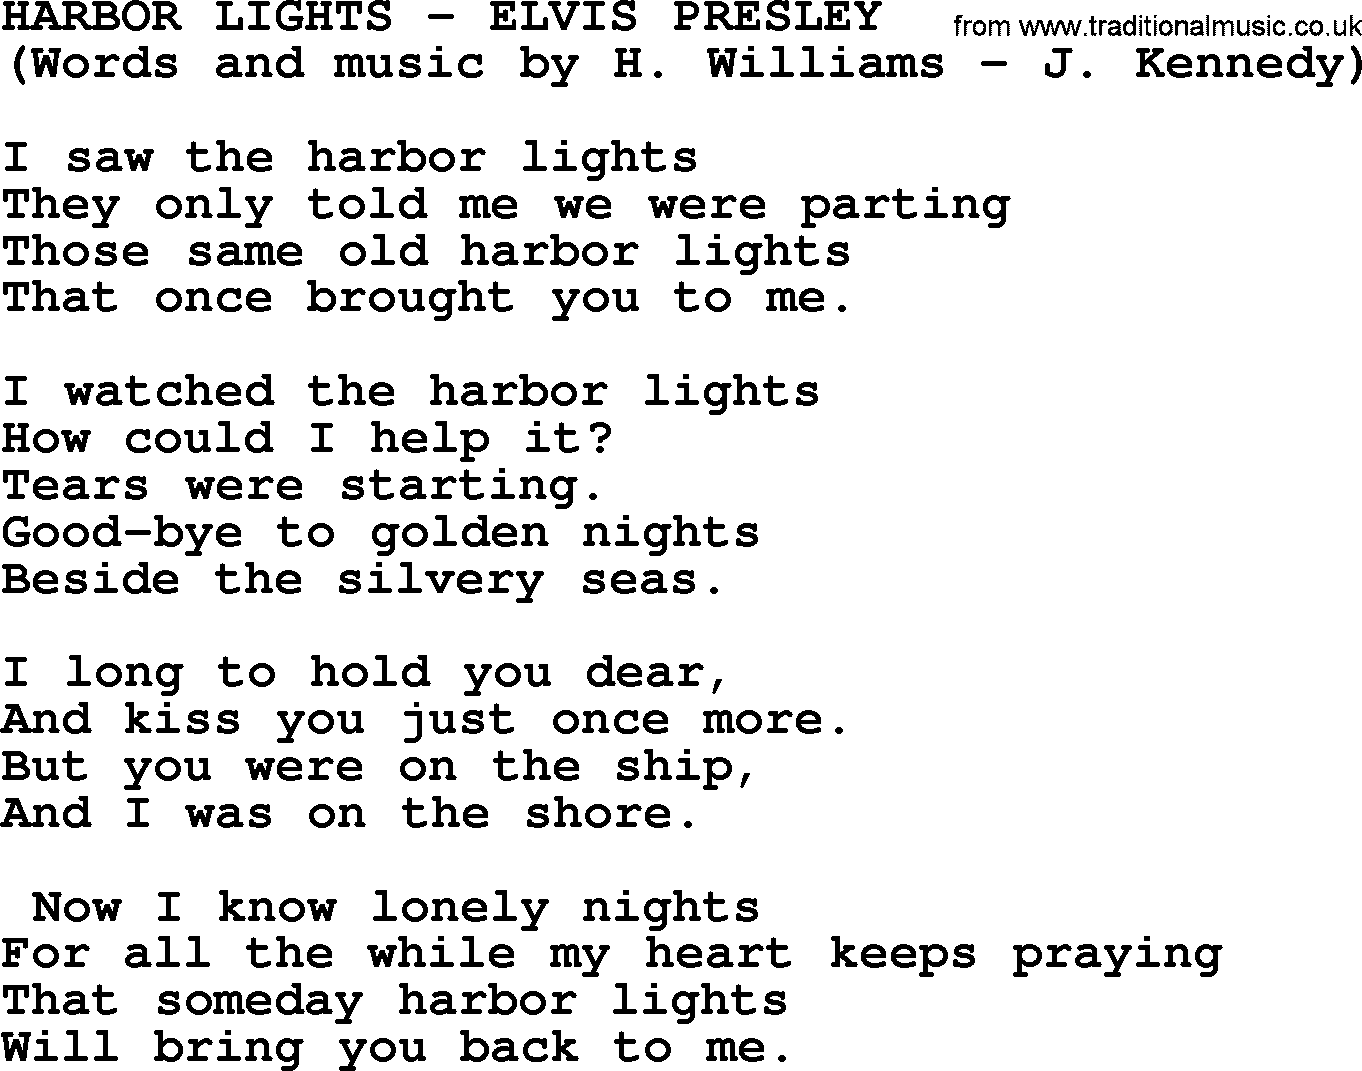 Elvis Presley song: Harbor Lights lyrics